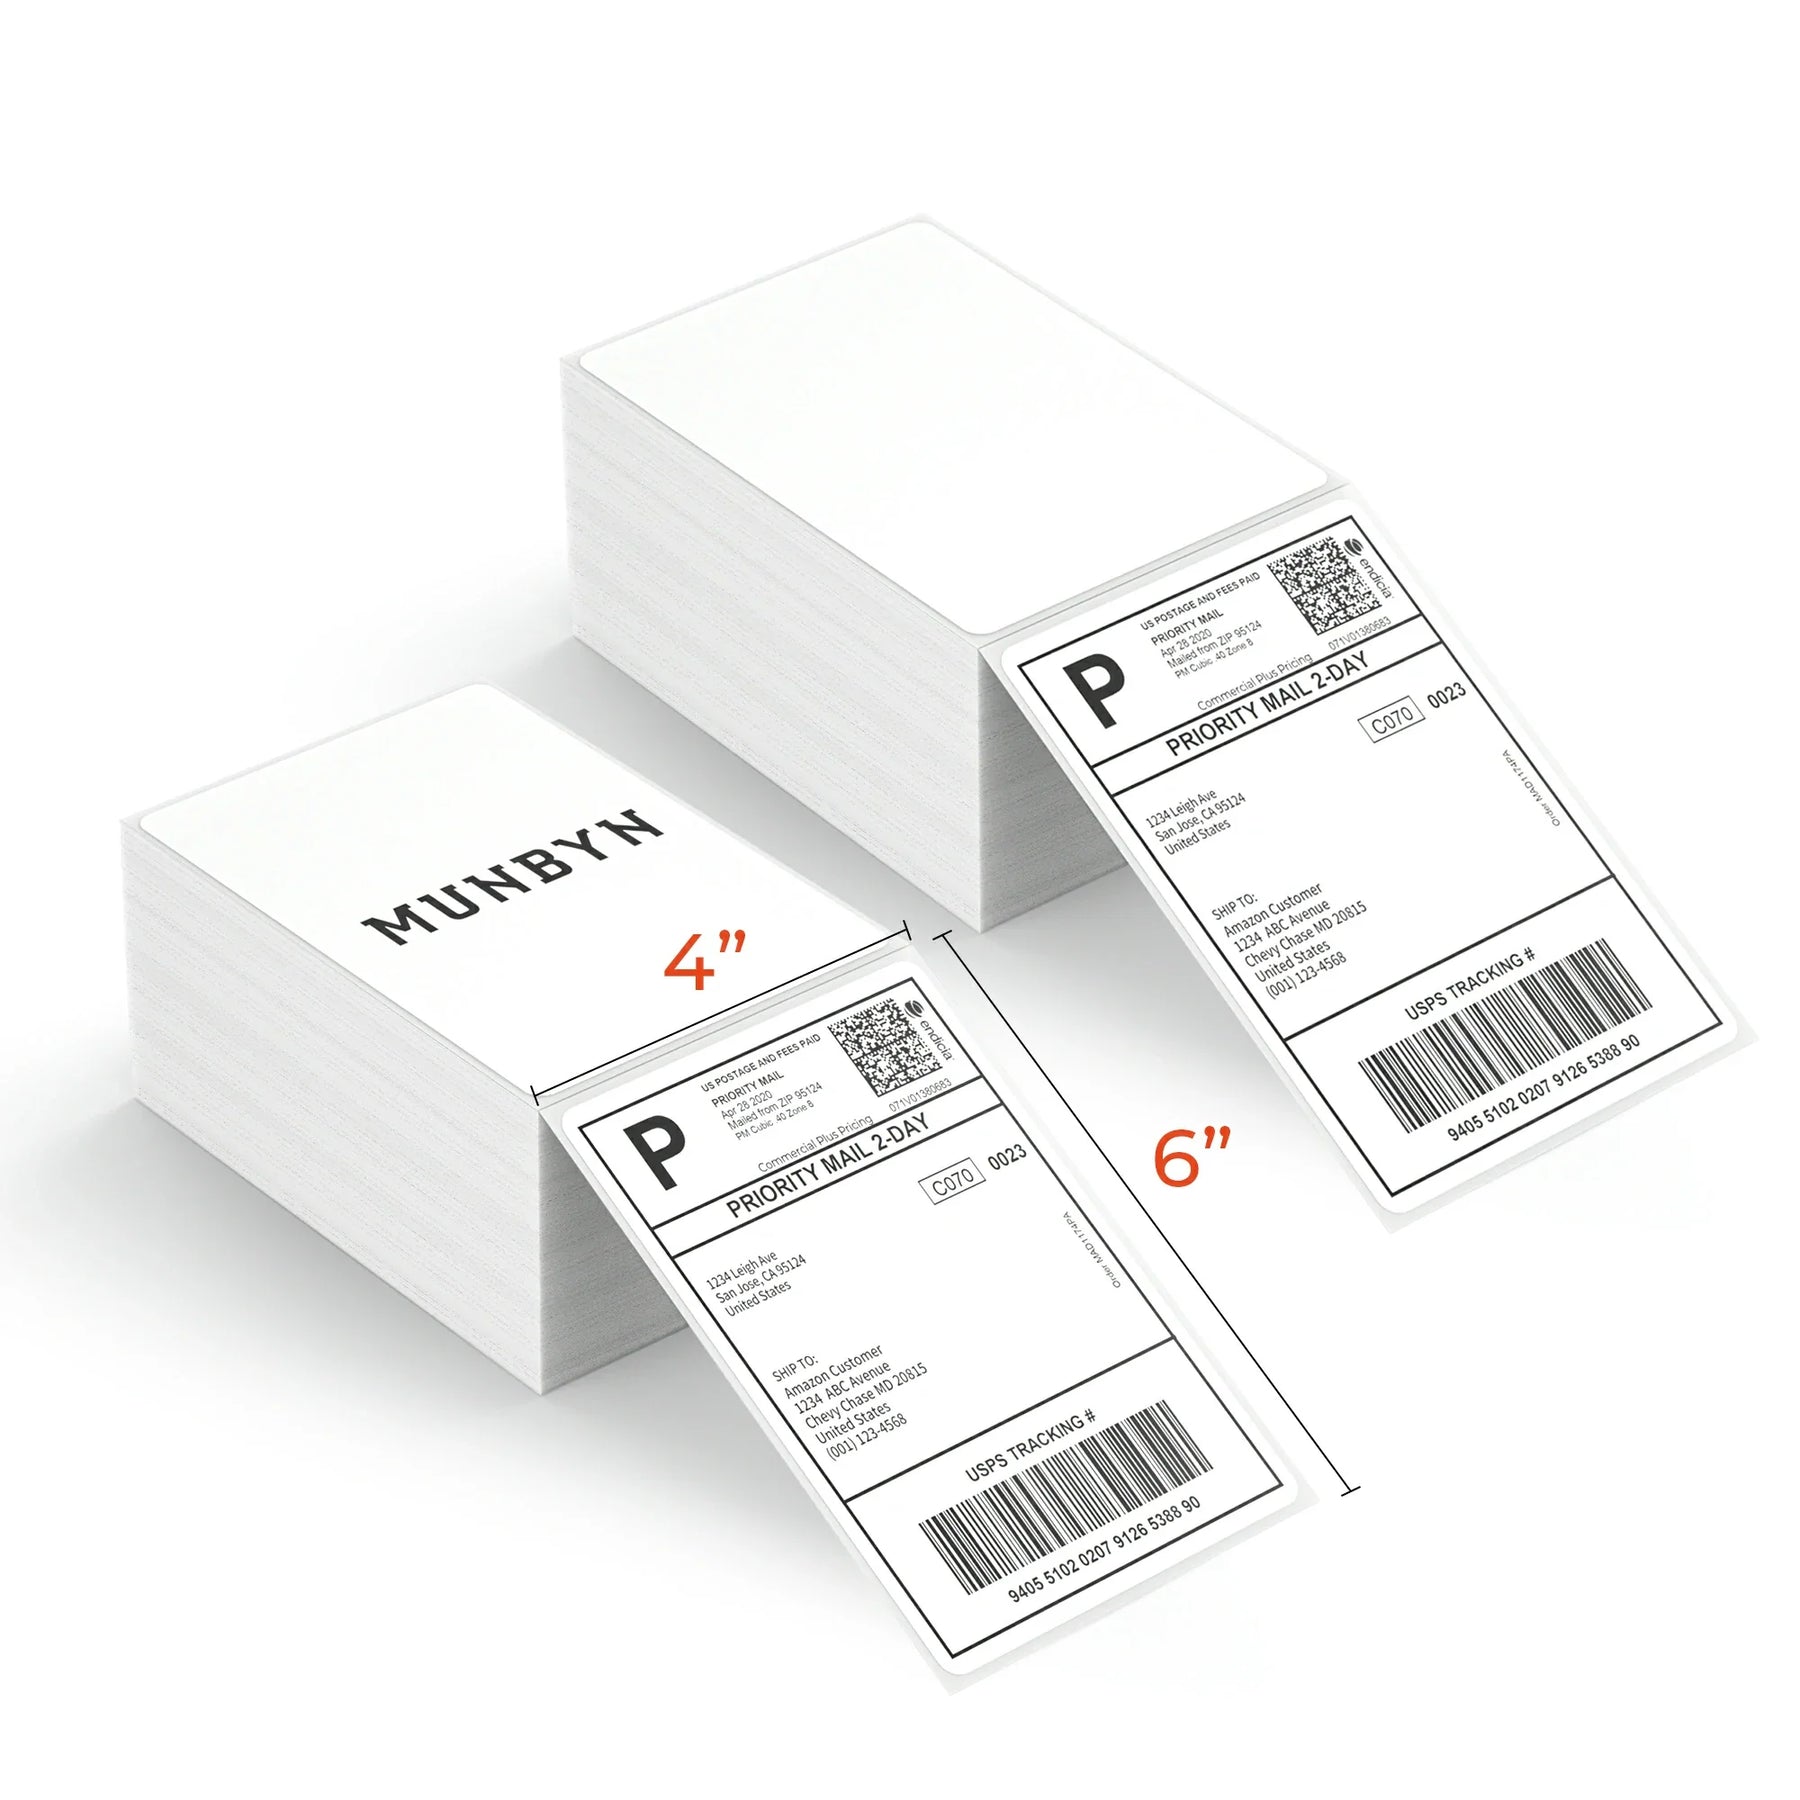 MUNBYN 热敏运输标签以每卷 500 个标签的形式提供，尺寸为 100 毫米 x 150 毫米。